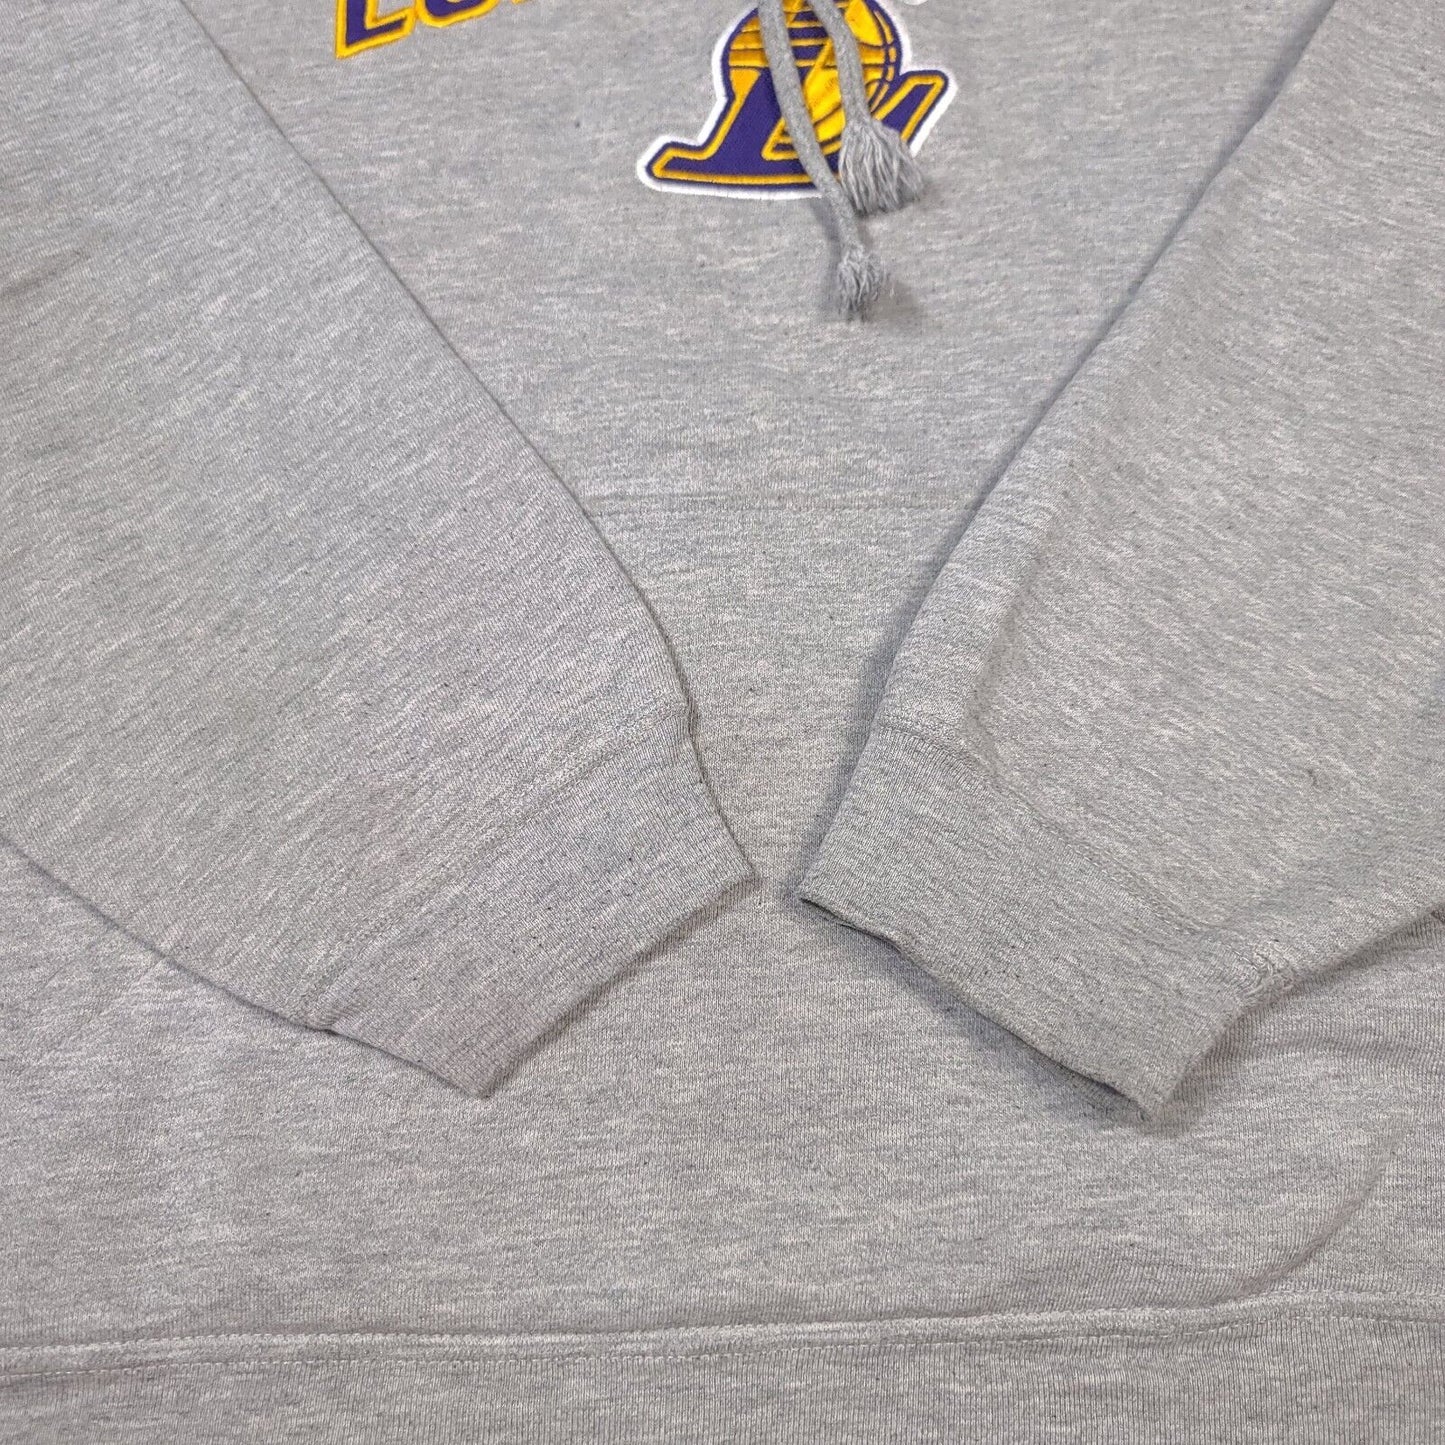 Los Angeles La Lakers Nba Adidas Gray Hoodie Sweater